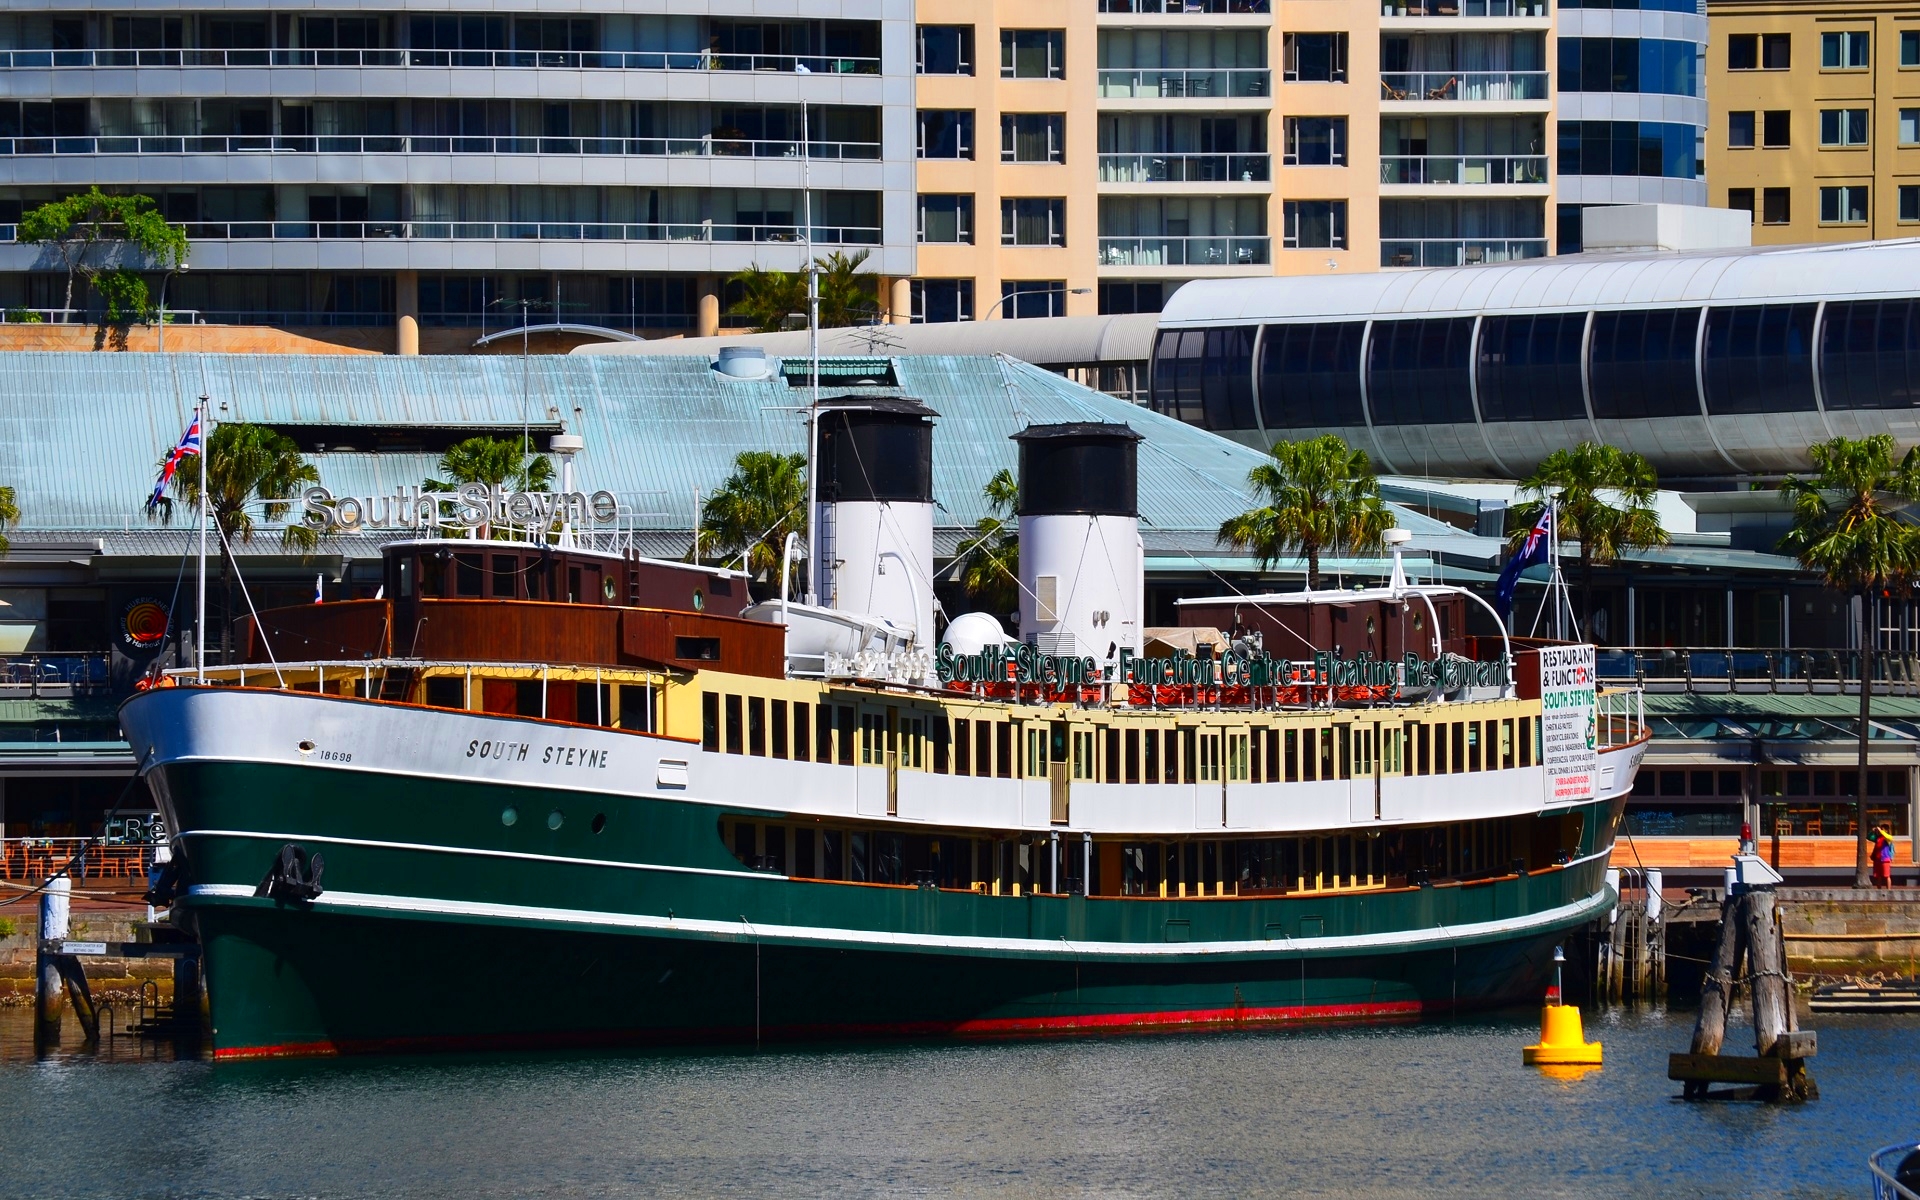 Australia Boat Darling Harbour Ferry Harbor Restaurant South Steyne Sydney 1920x1200